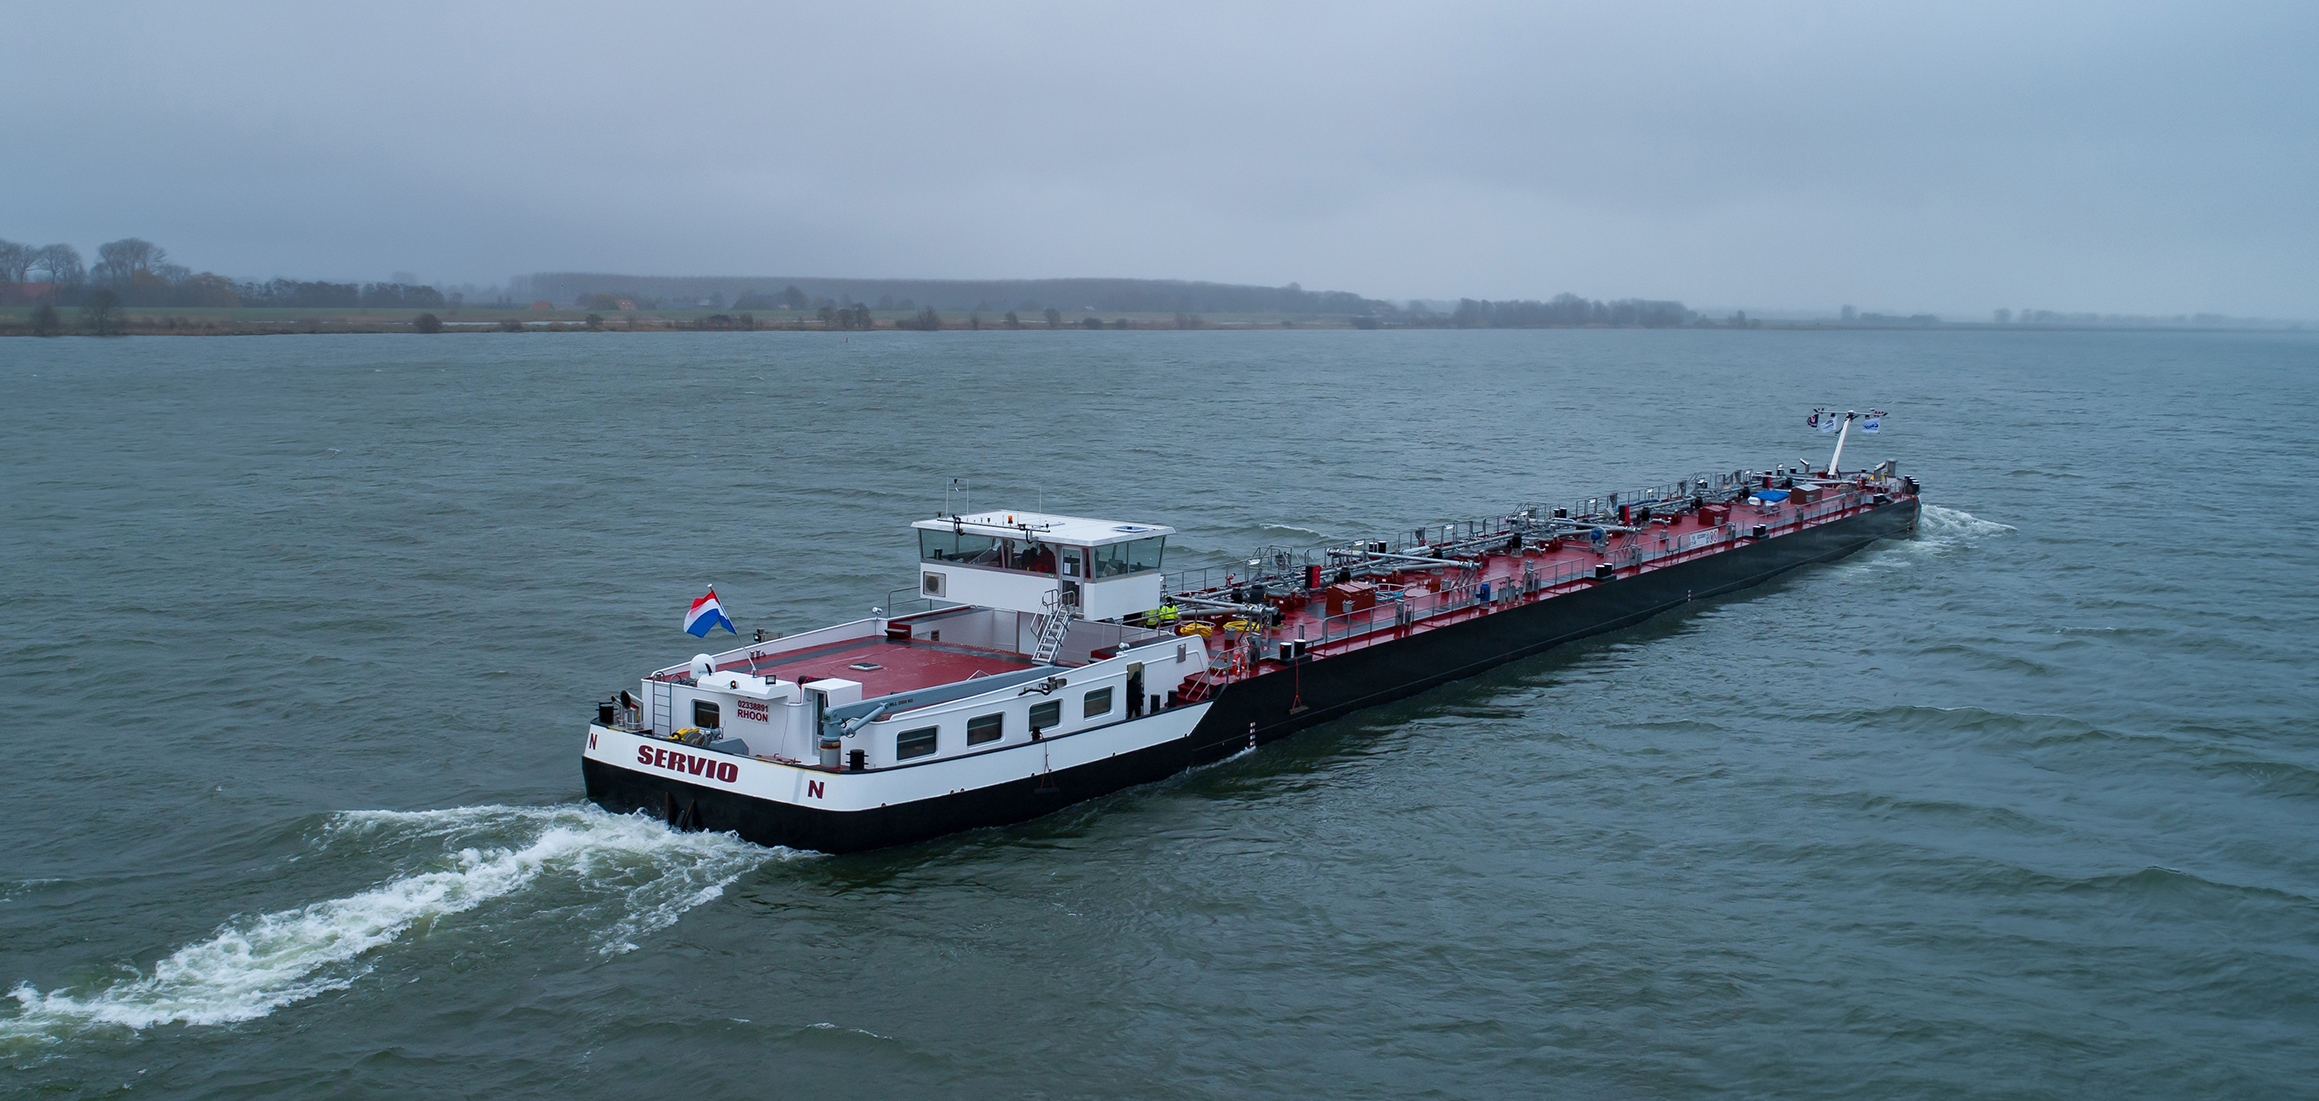 the servio making way on sea trials in december 2020